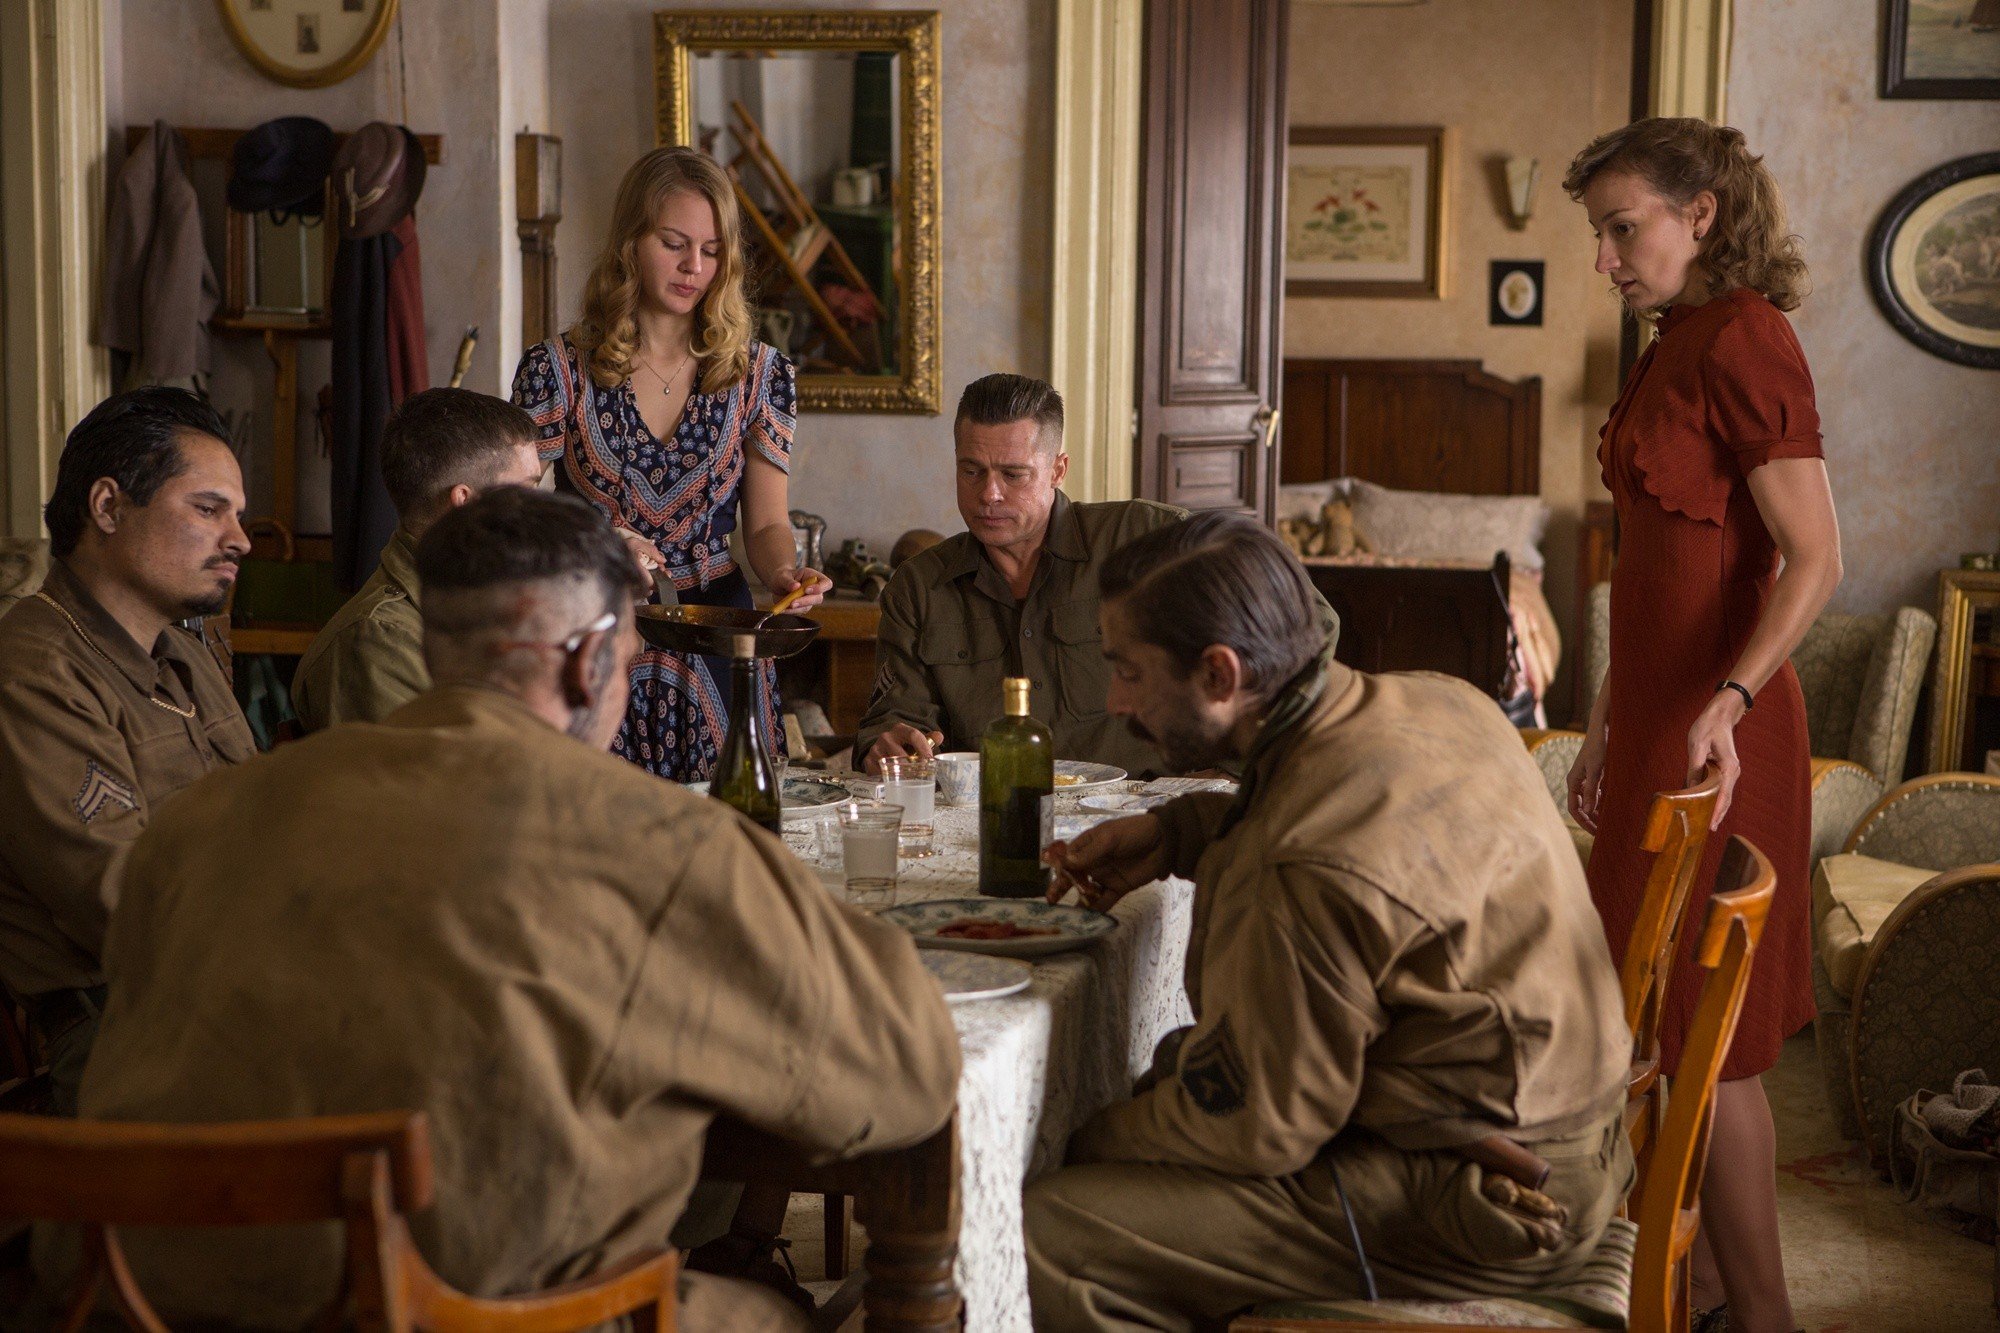 Michael Pena, Brad Pitt, Shia LaBeouf and Stella Stocker in Columbia Pictures' Fury (2014)